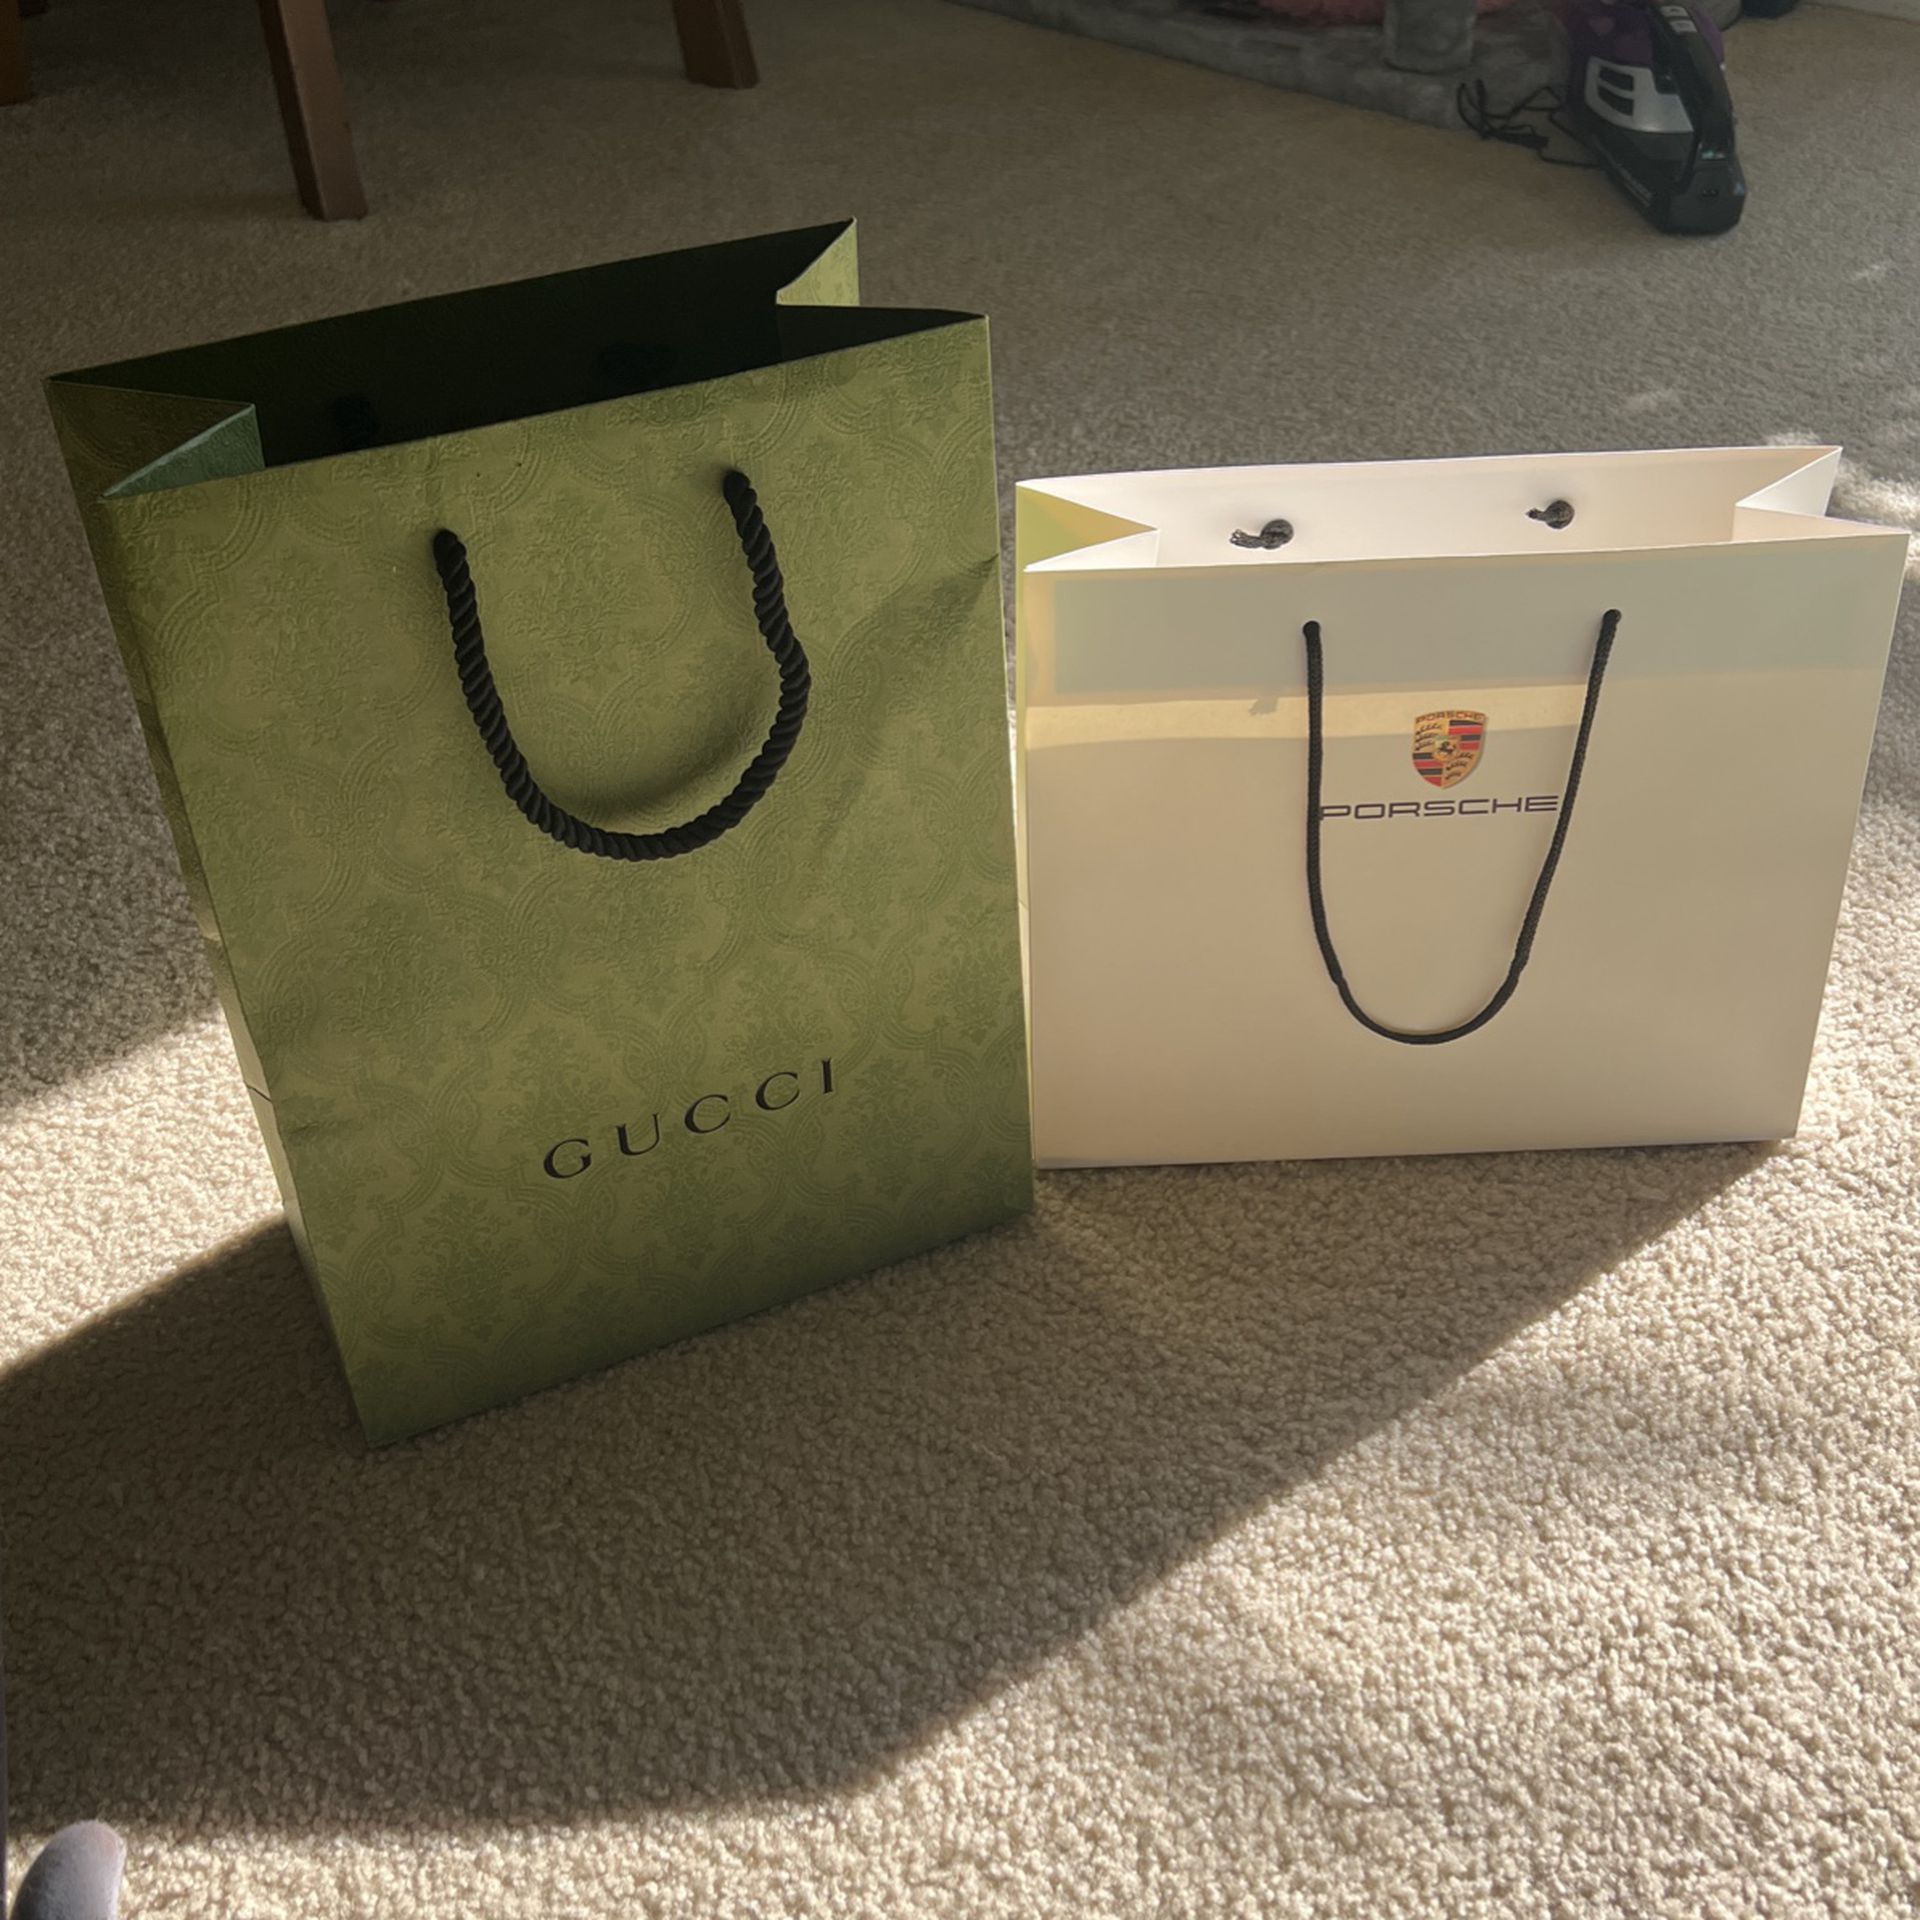 Gucci And Porsche Paper Bags